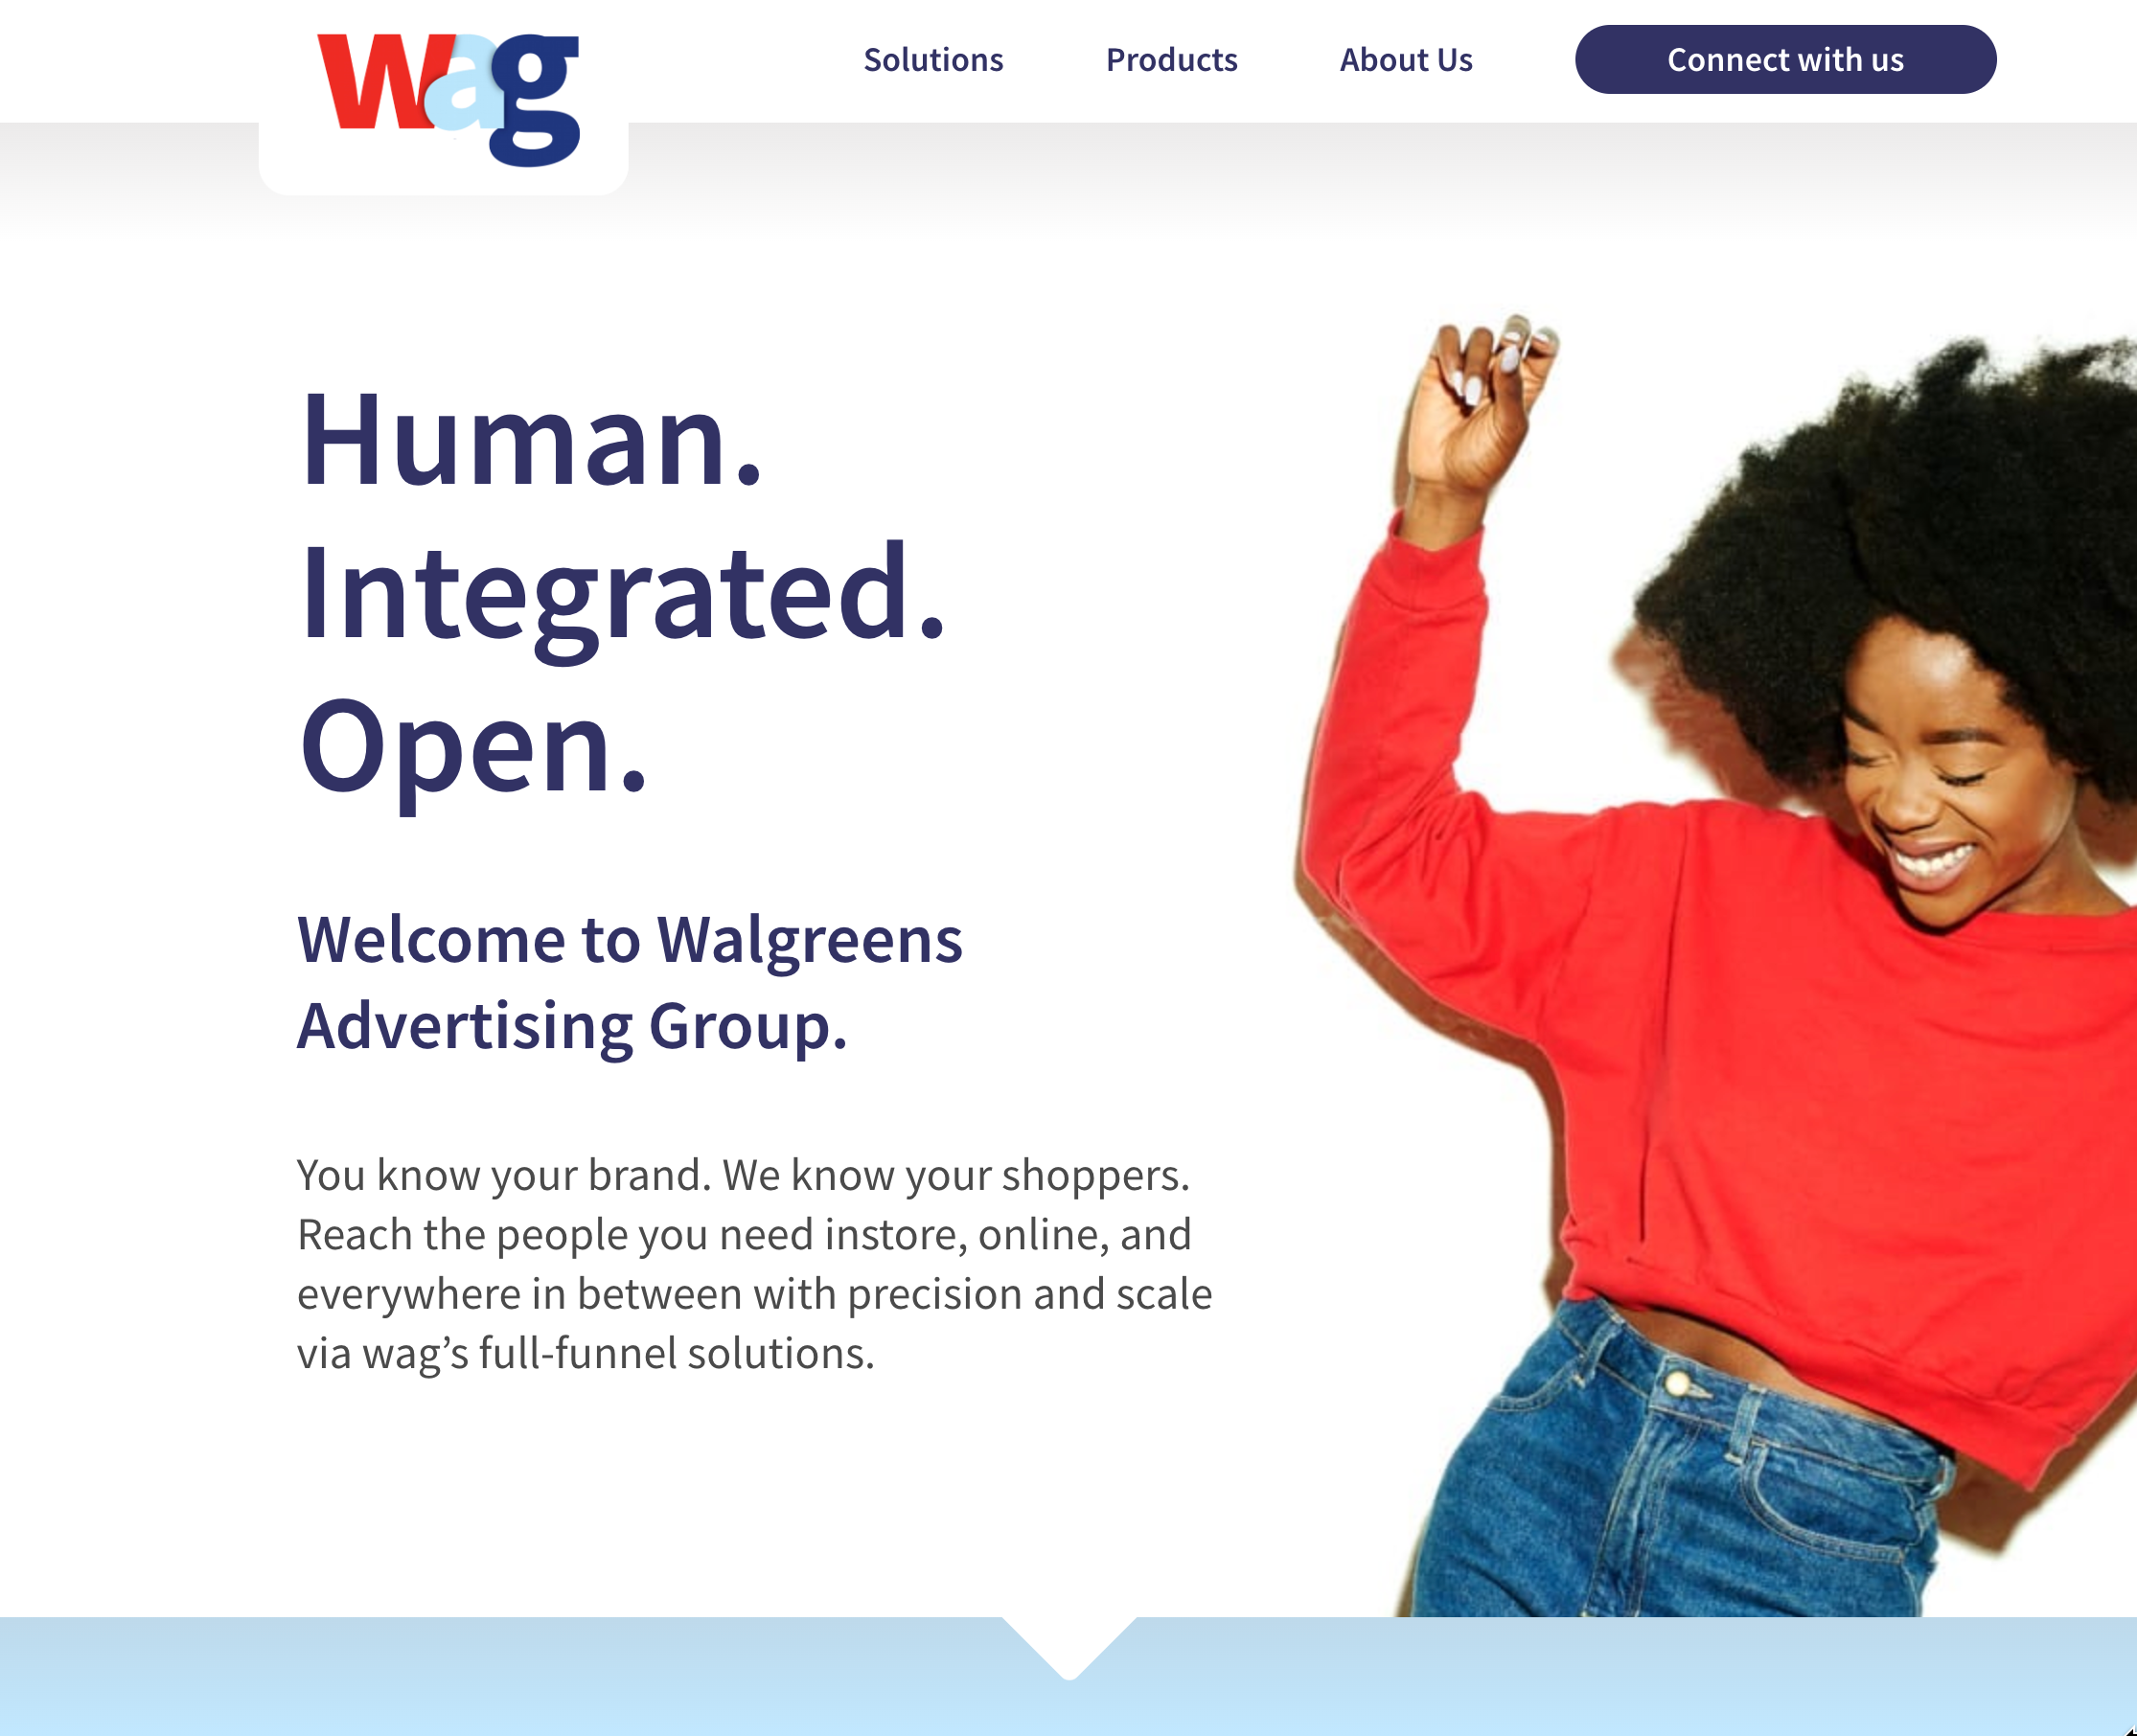 Walgreens Advertising Group